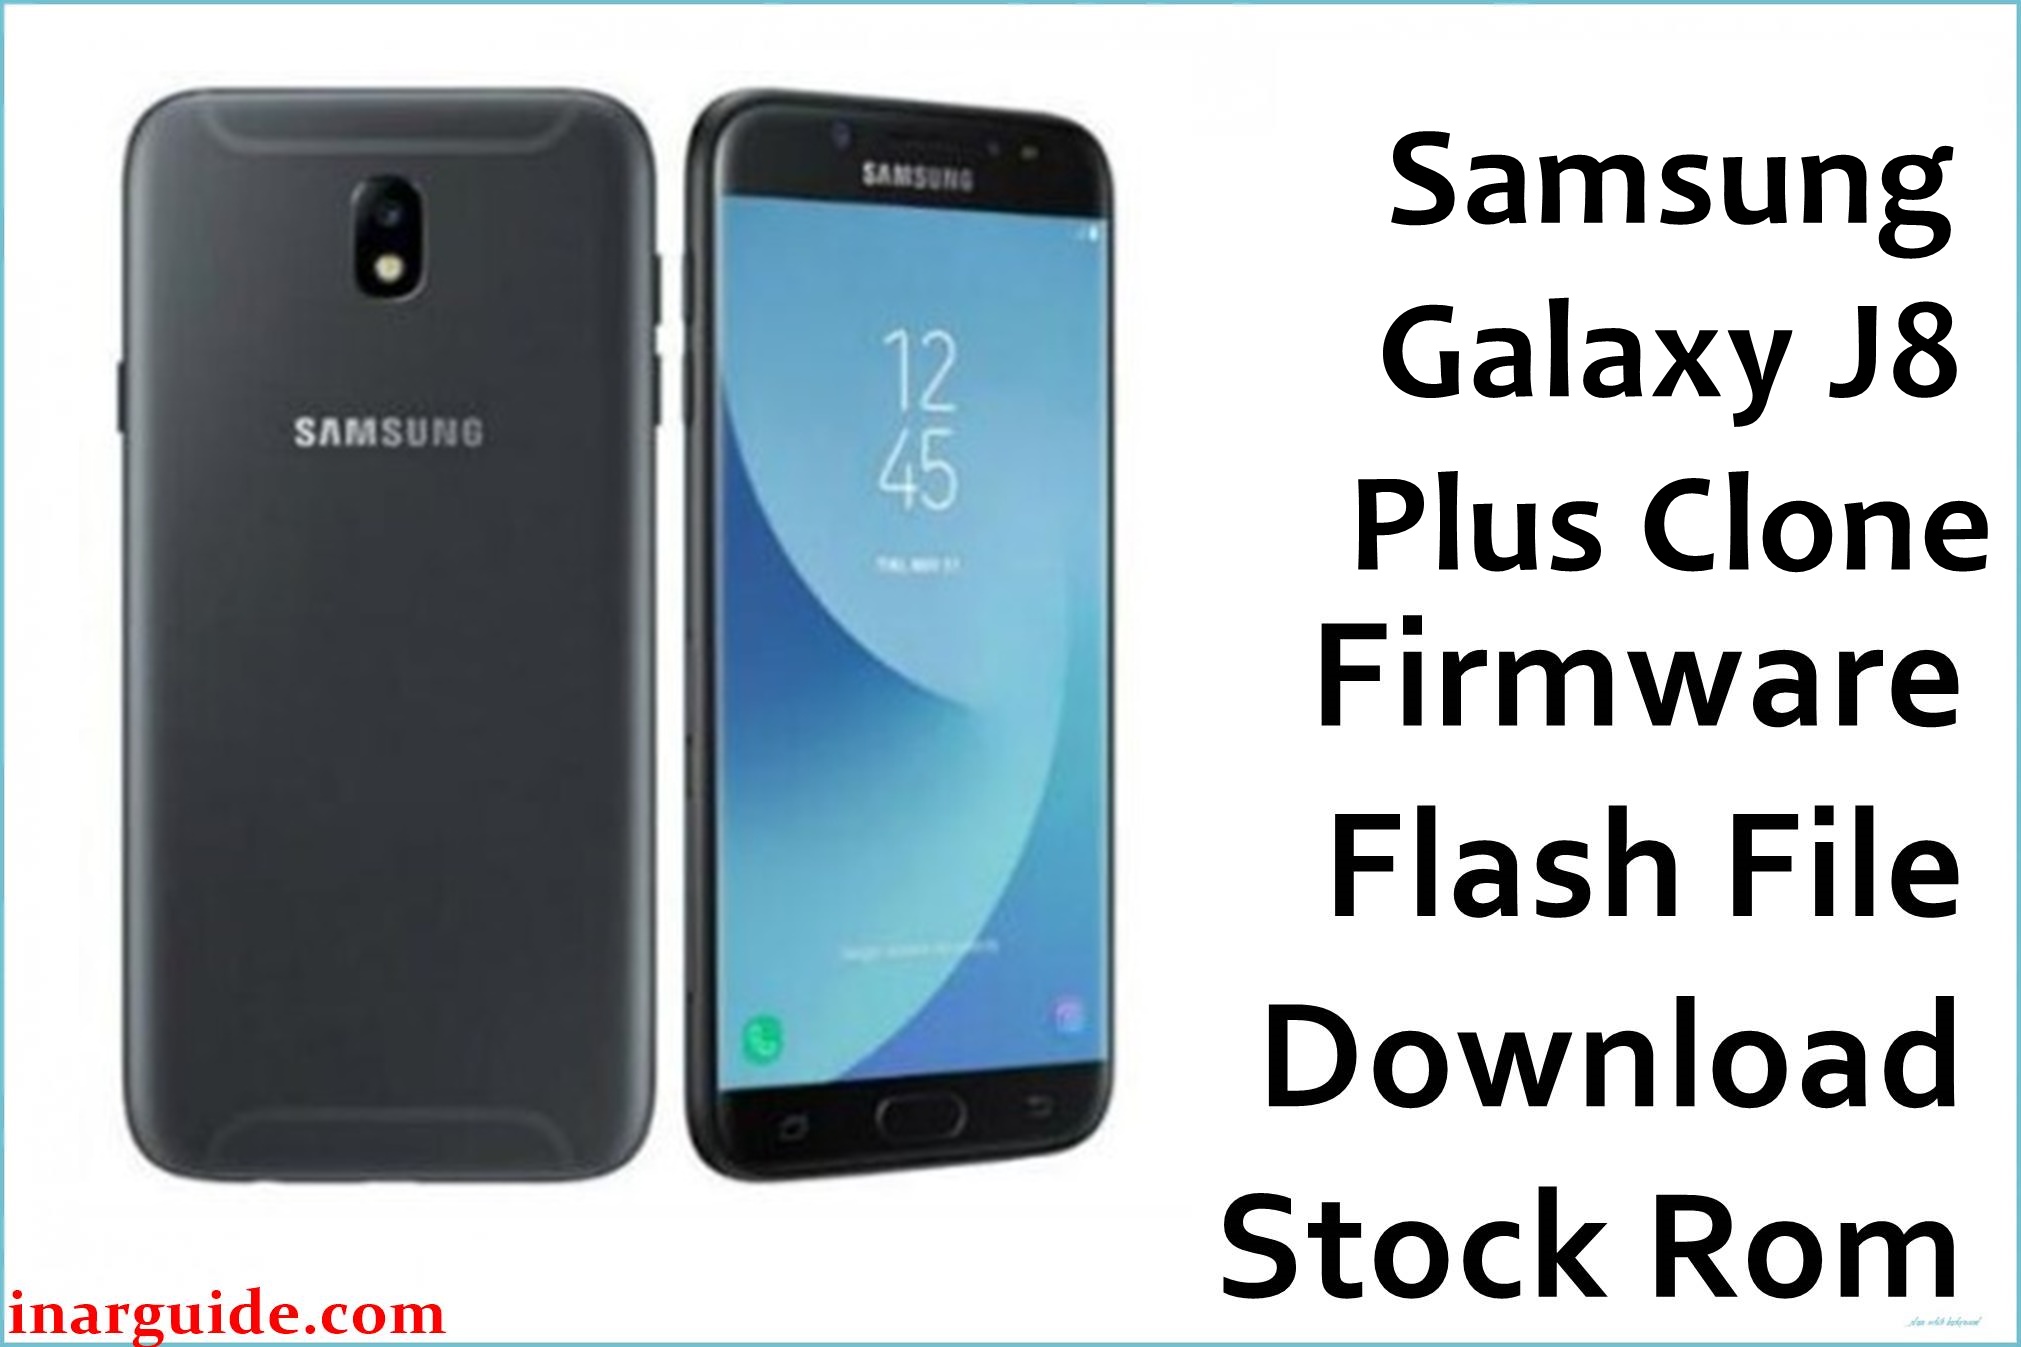 Samsung Galaxy J8 Plus Clone